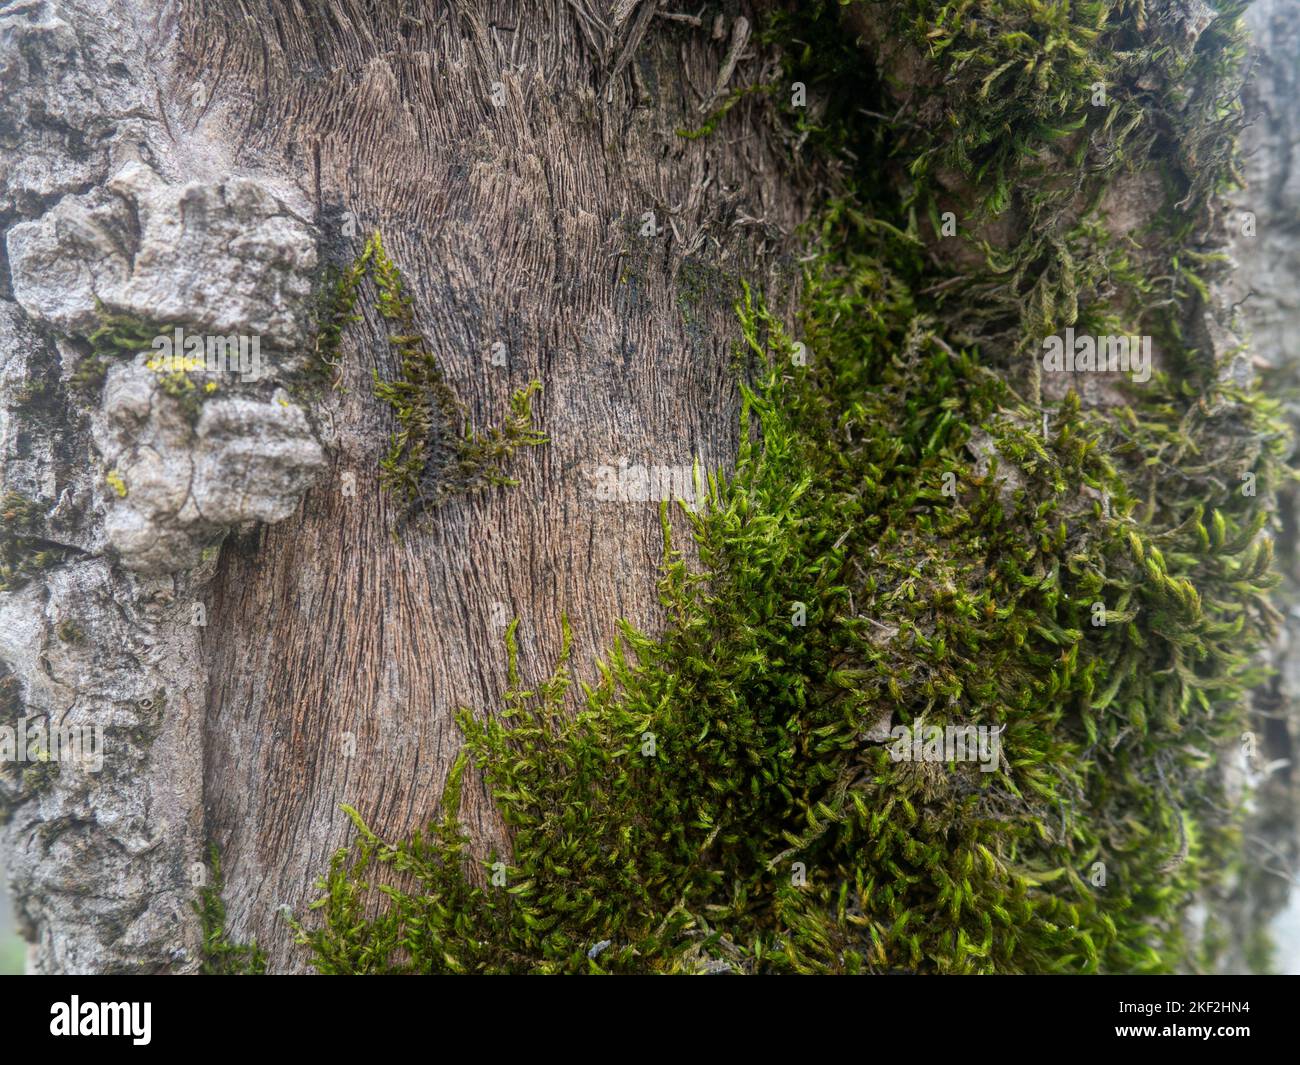 Palm tree bark in moss. Moss on the bark of an old tree. Botany. Organics. Stock Photo